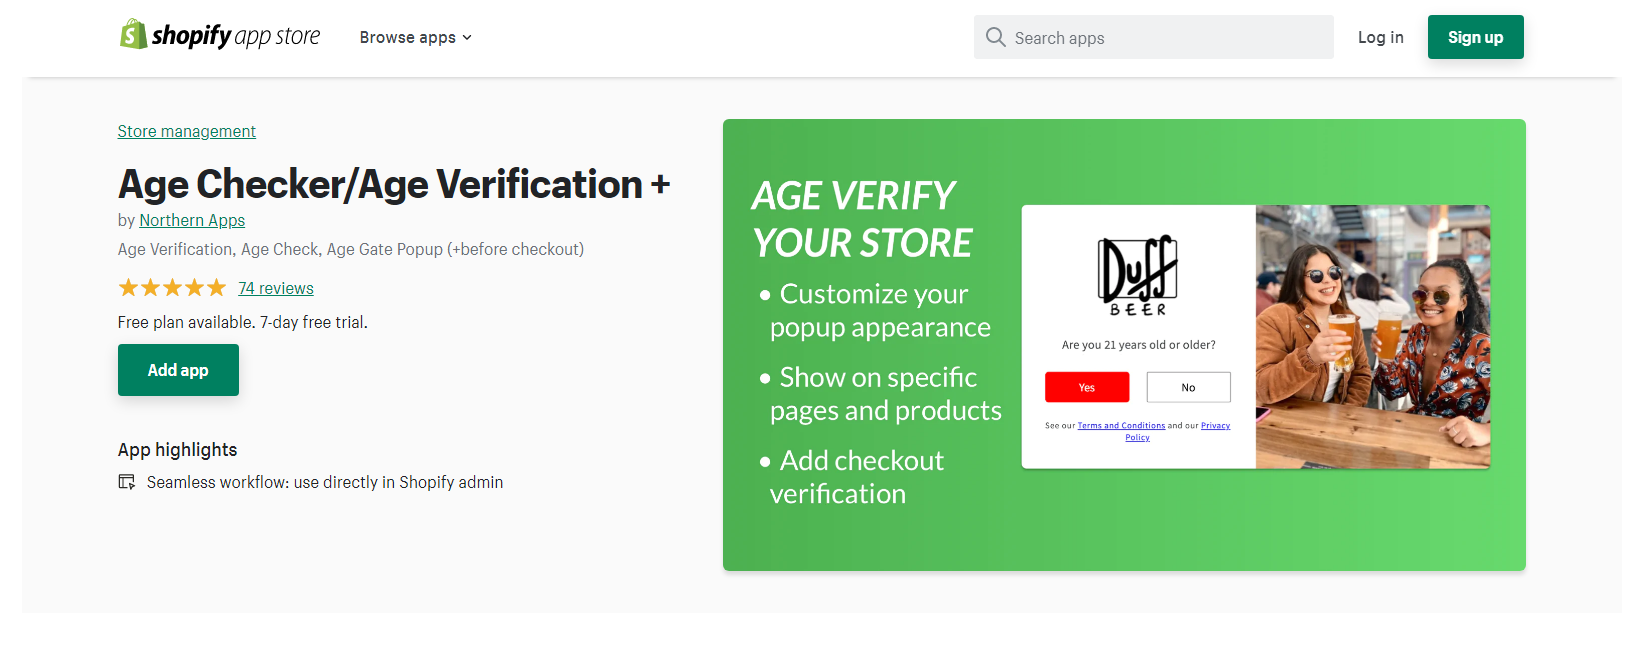 Shopify age verification